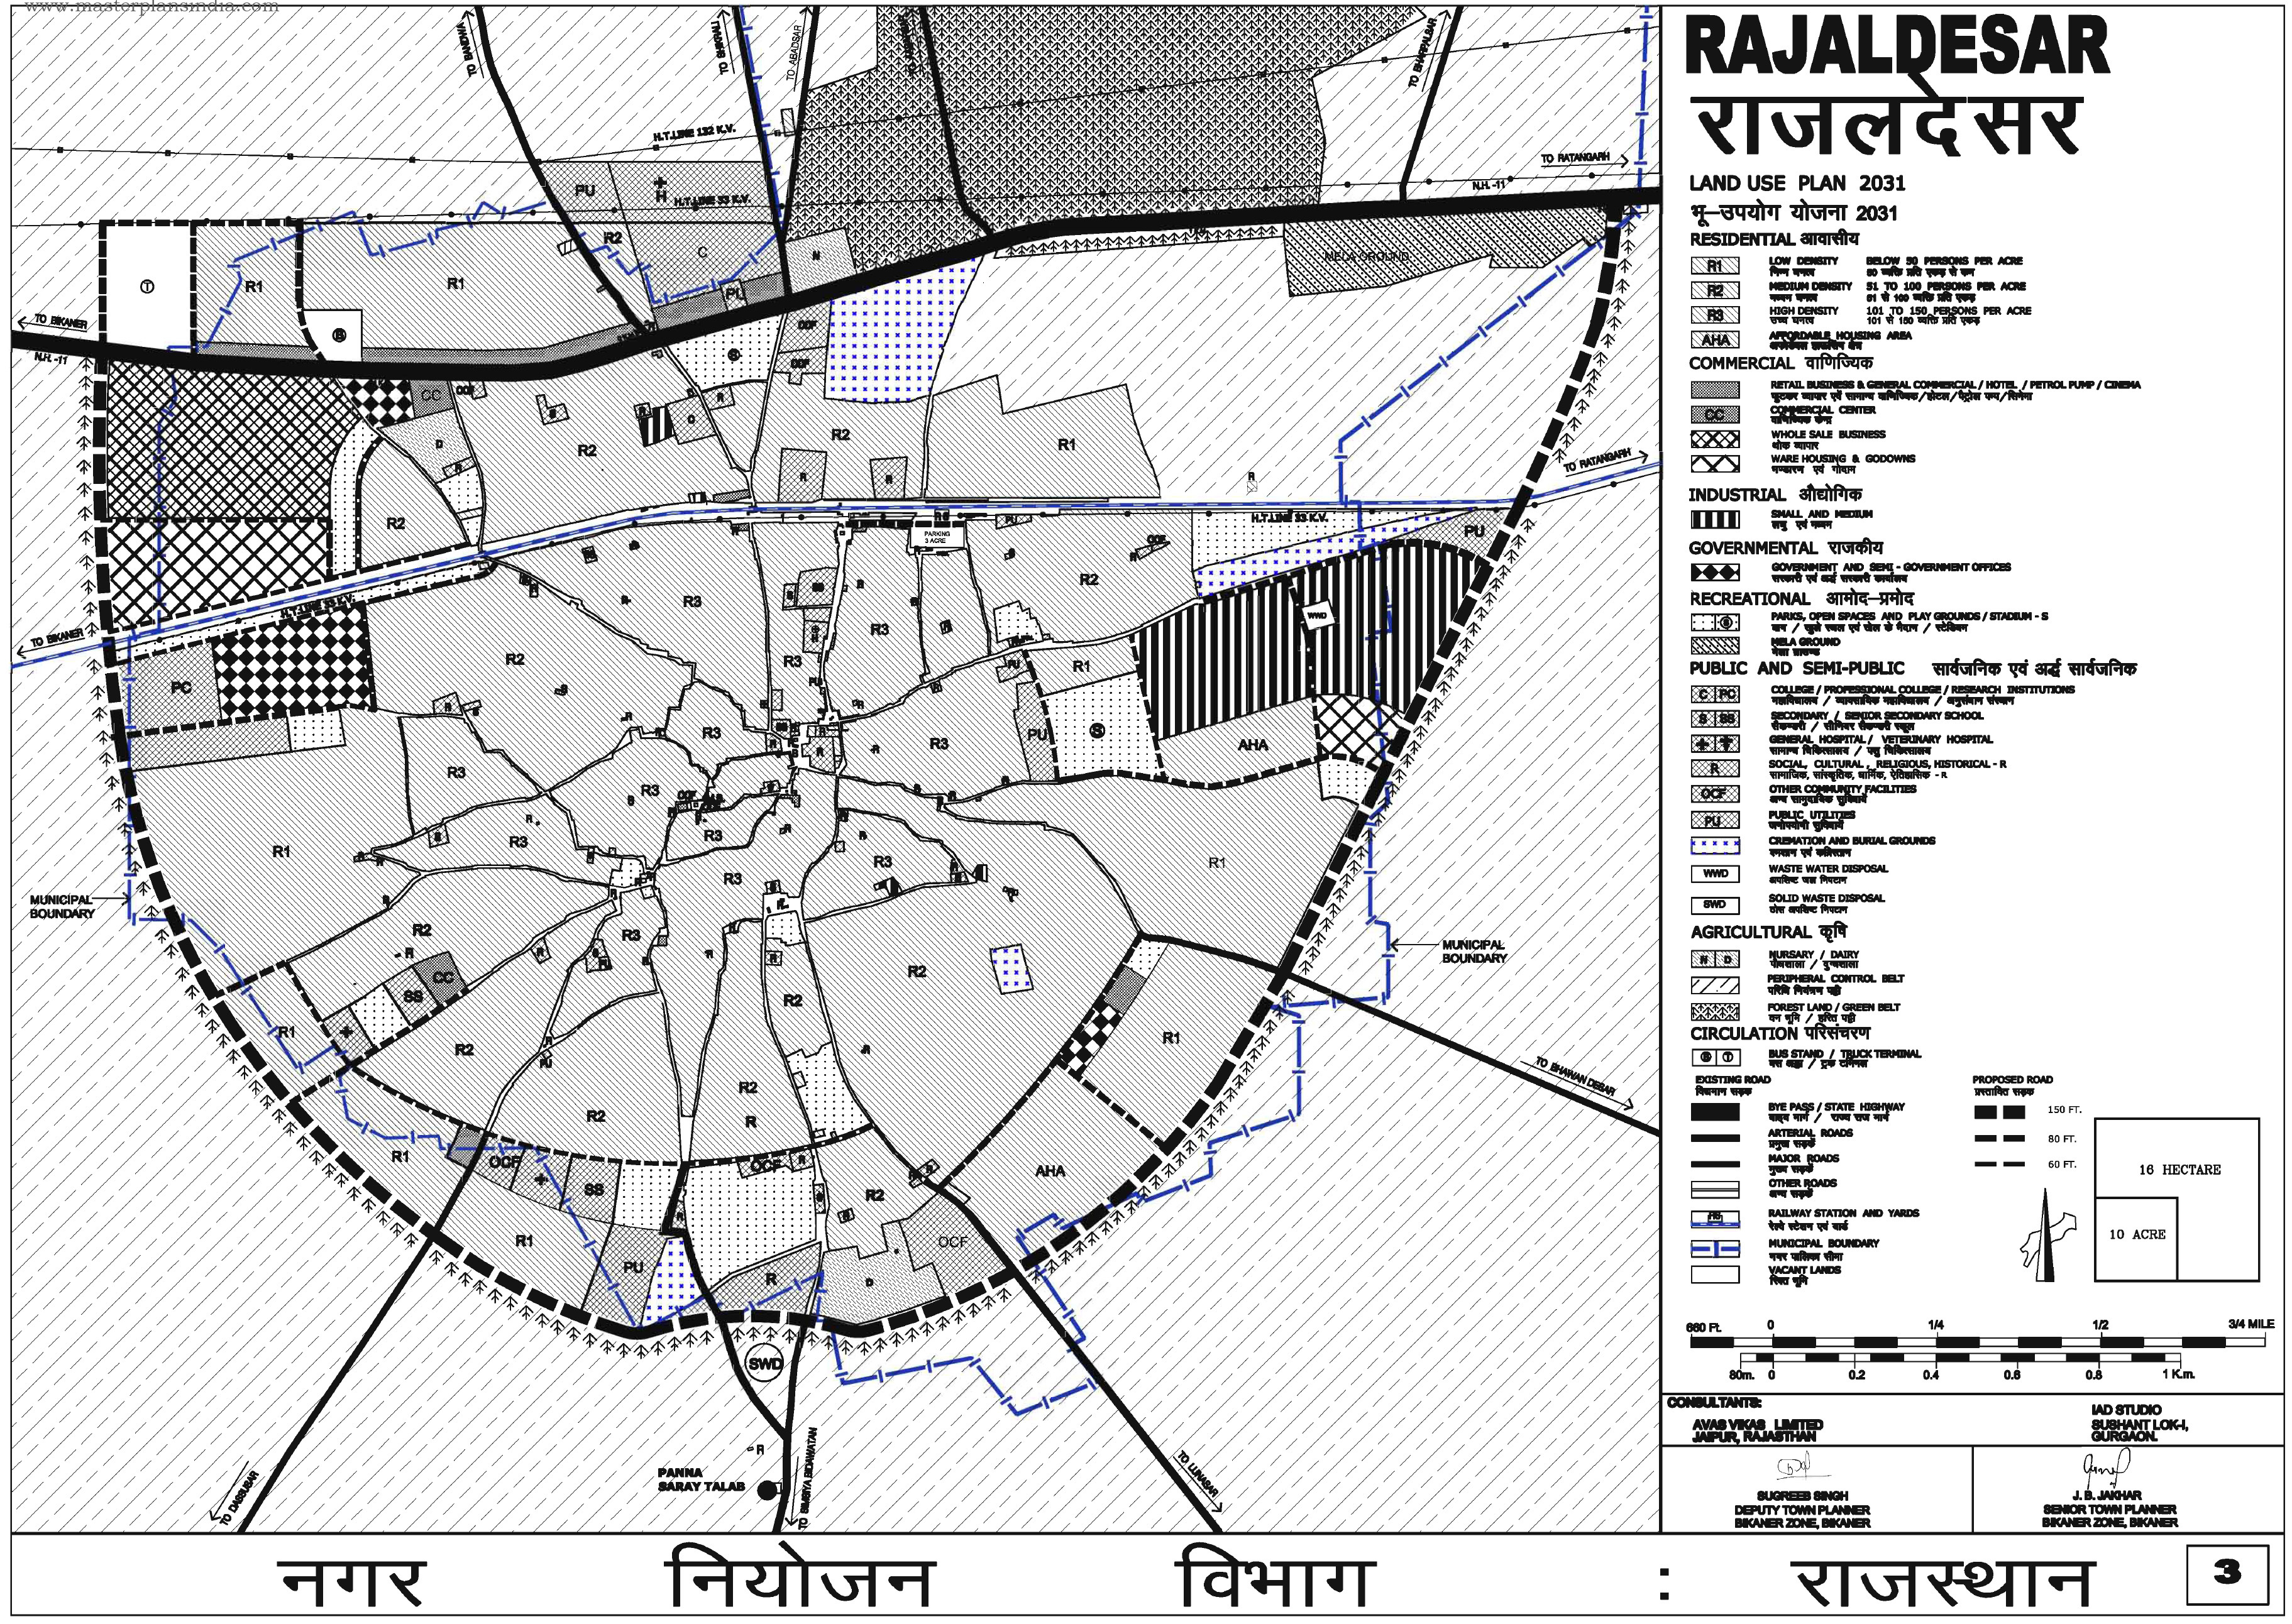 Rajaldesar Master Development Plan 2031 Map - Master Plans India